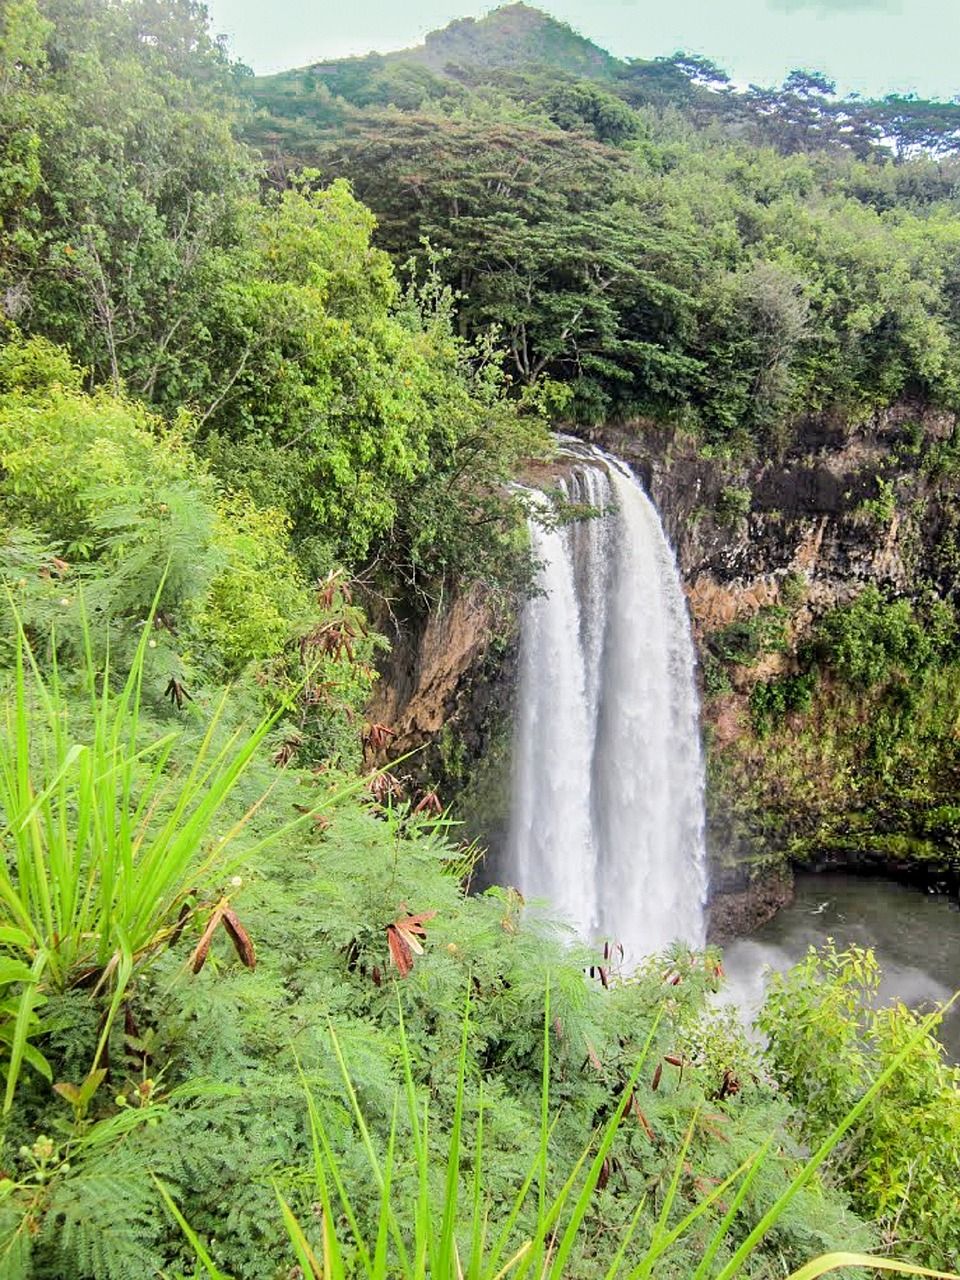 Above-Head View Of Wailua Falls In Kauai